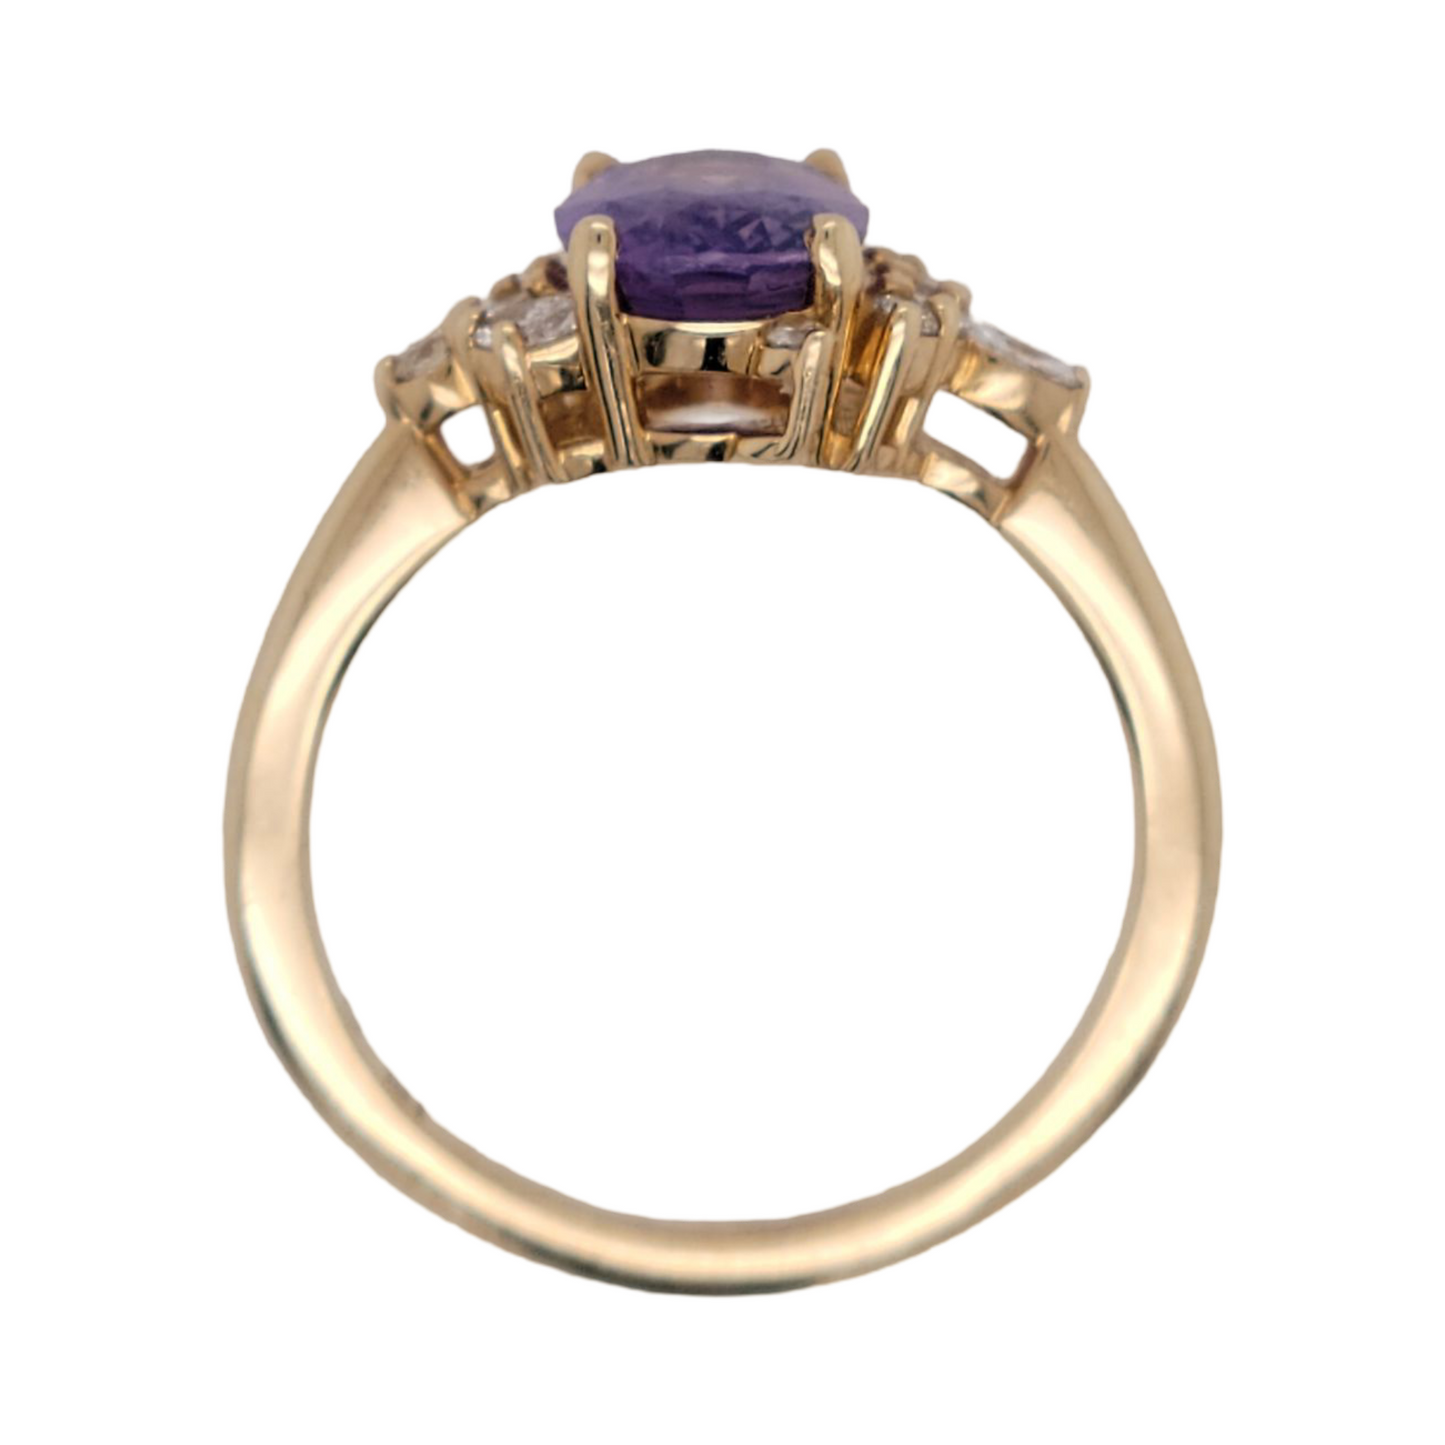 Oval Purple Sapphire Ring